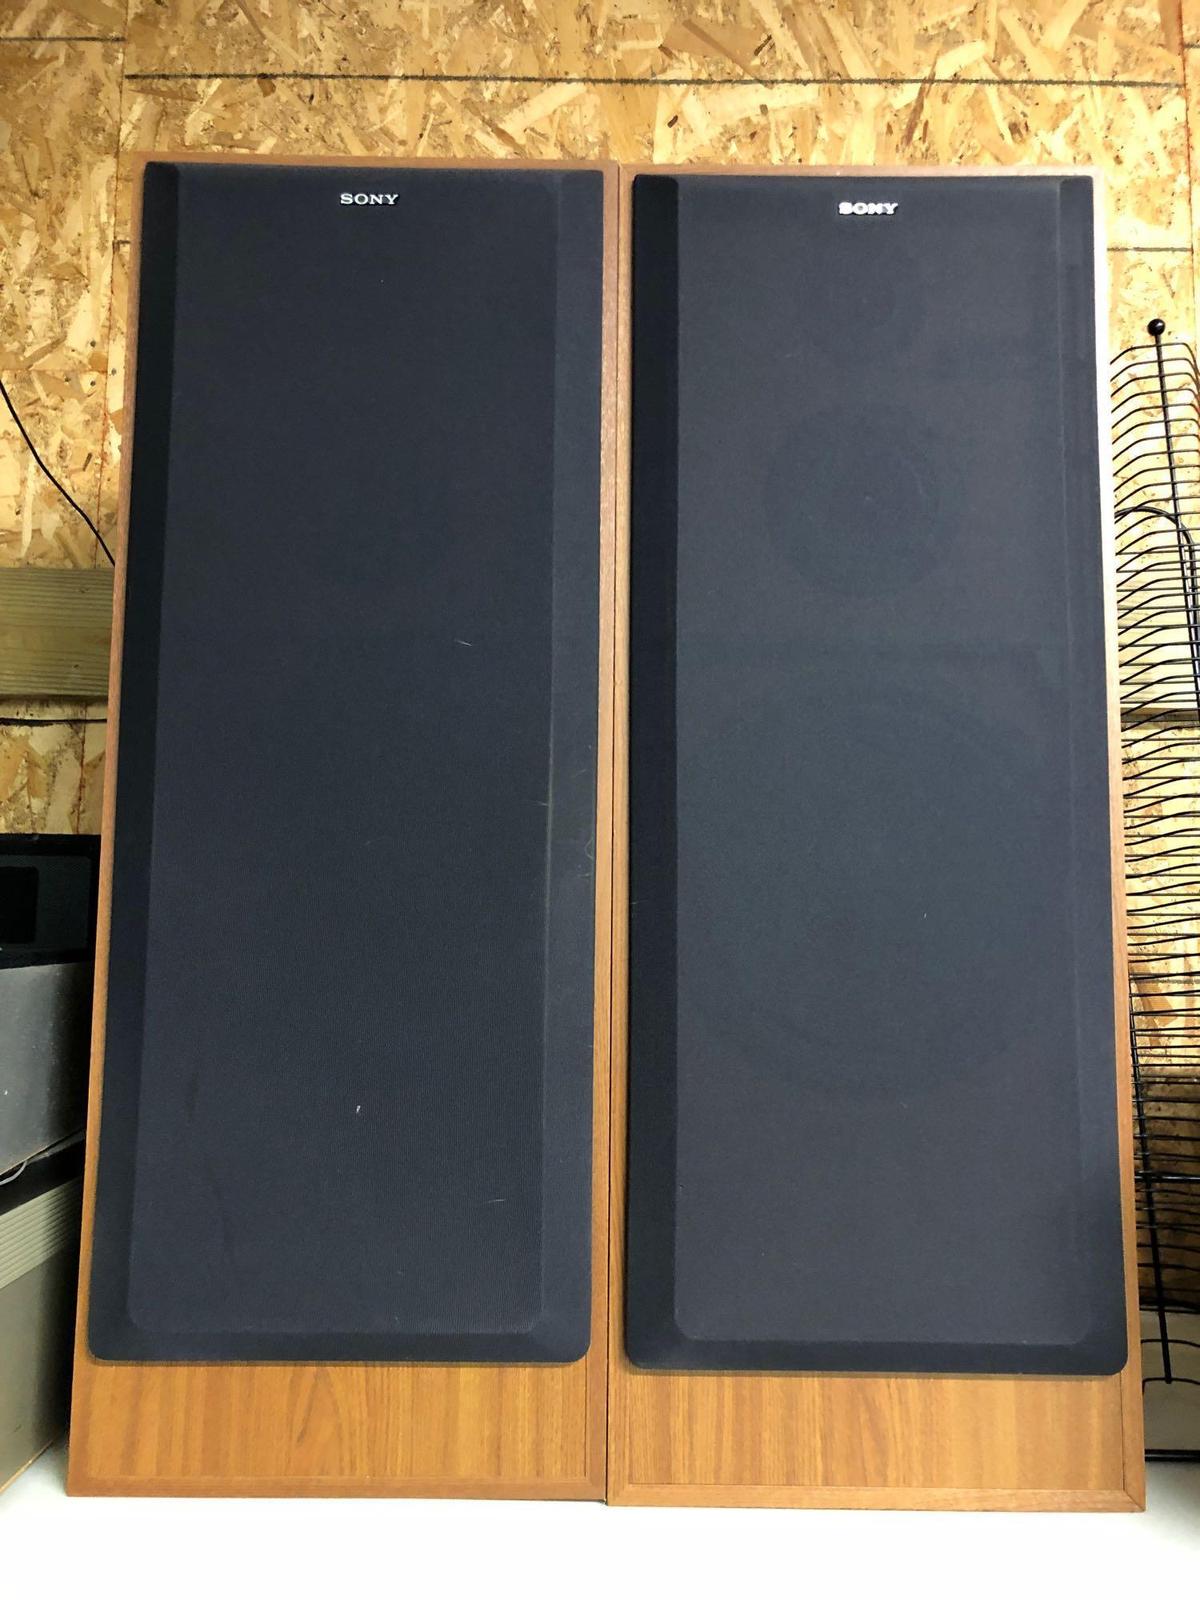 Sony Floor Model Speakers